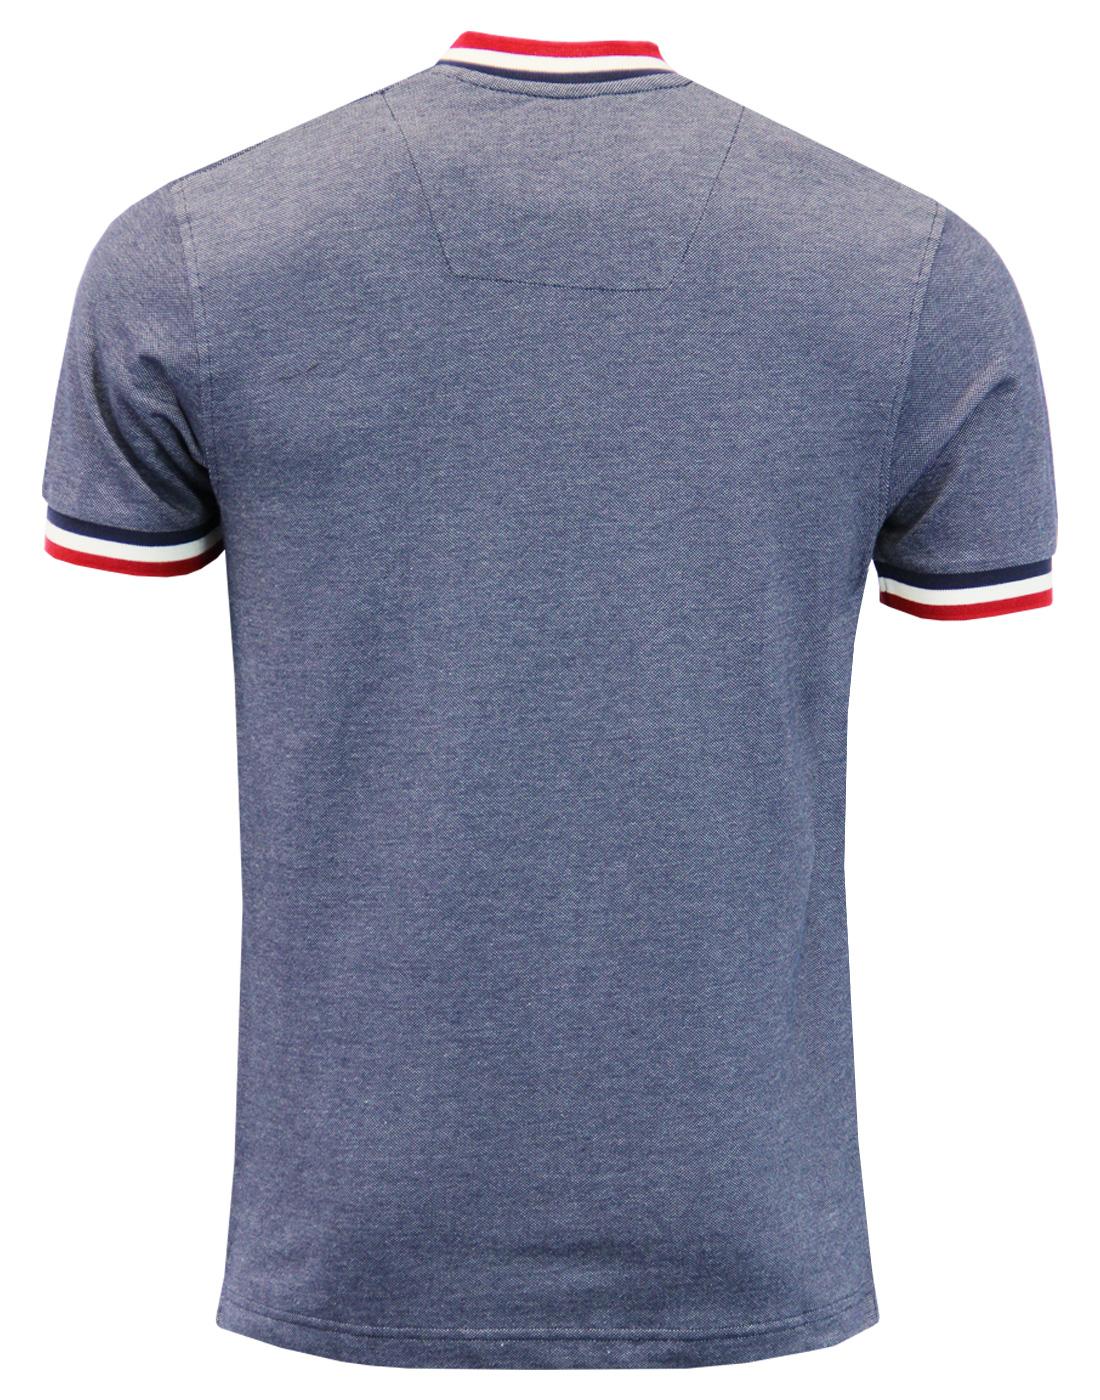 WIGAN CASINO Retro Mod Oxford Marl Racing Stripe T-shirt in Navy